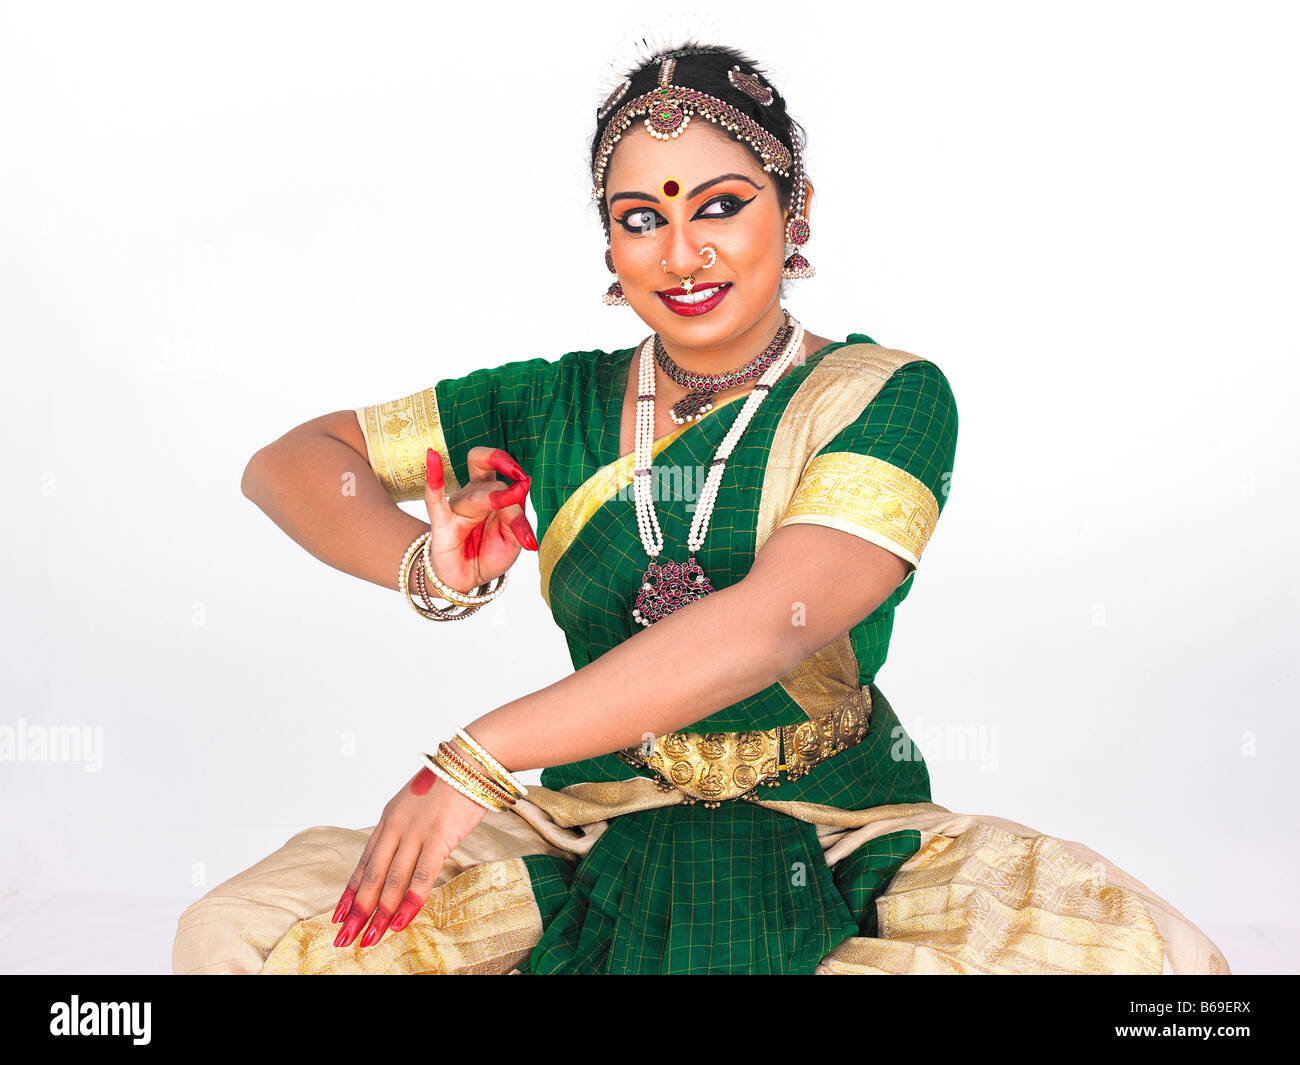 female classical bharathanatyam dancer of tamil nadu in south india B69ERX